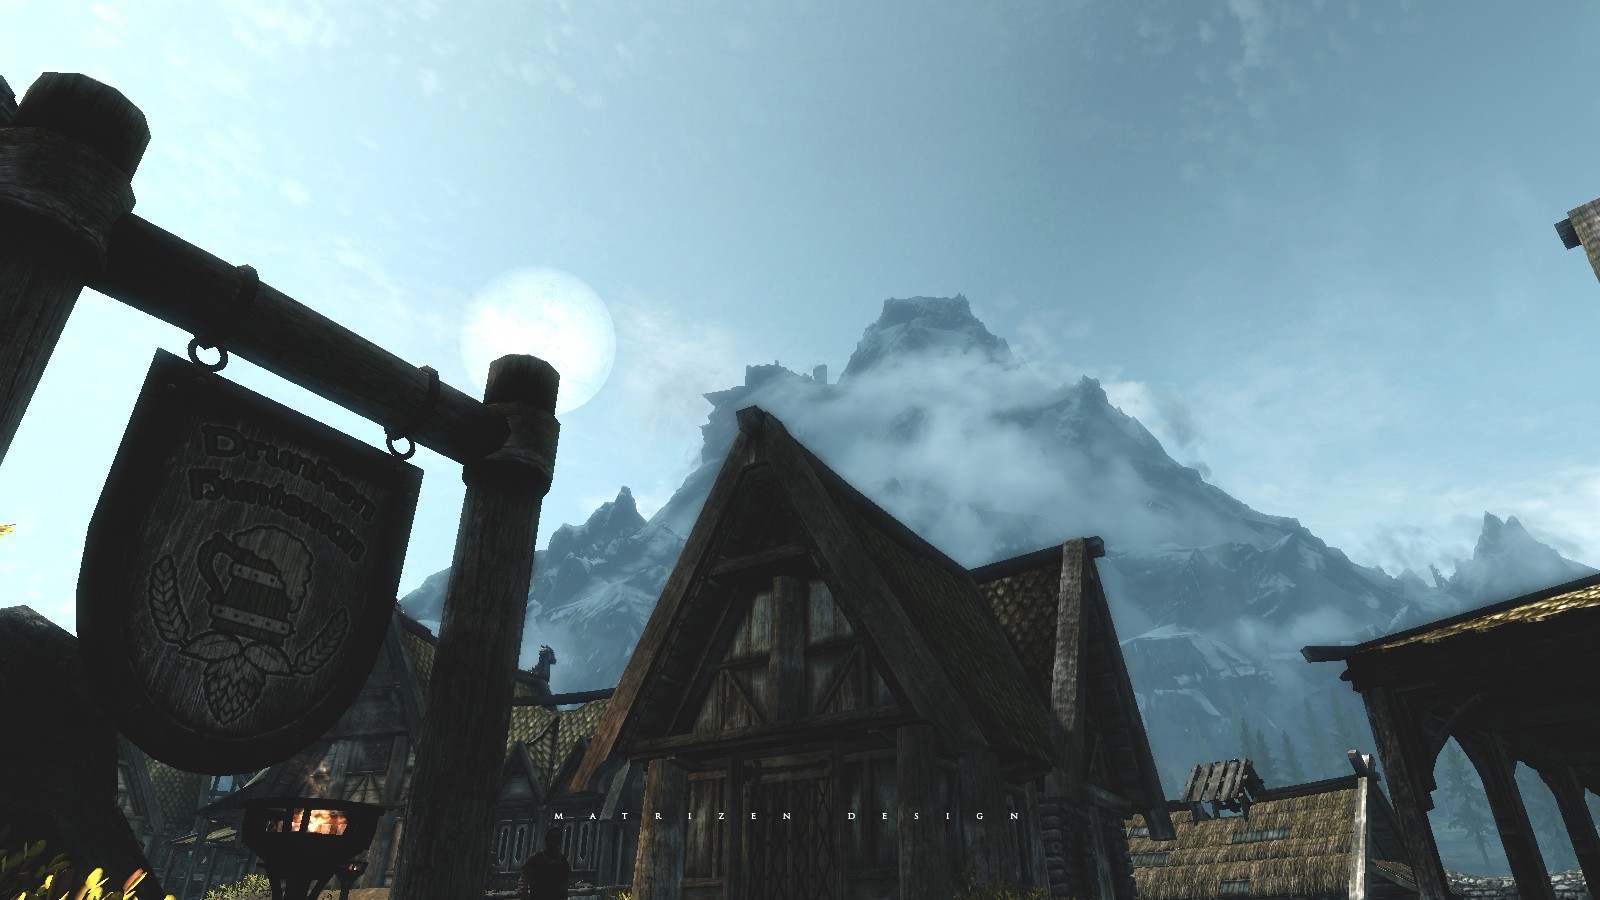 The Elder Scrolls V: Skyrim, Mountains, Landscape, Villages, Clouds, Sky, Winter, Snow, Moon, Trees, Forest, Video games, Screen shot Wallpaper